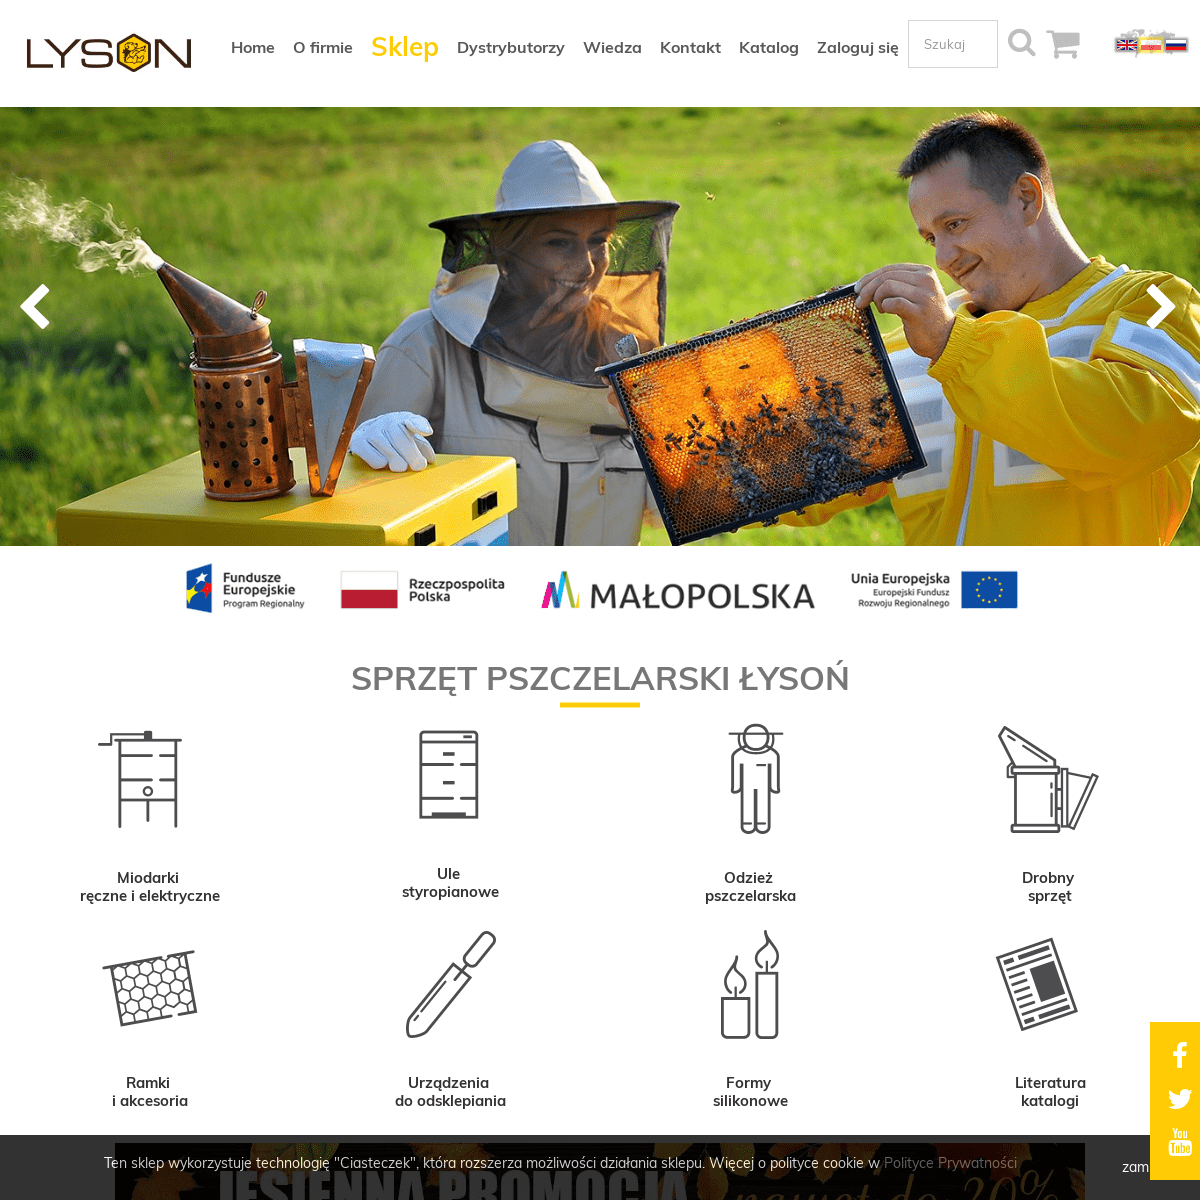 A complete backup of lyson.com.pl